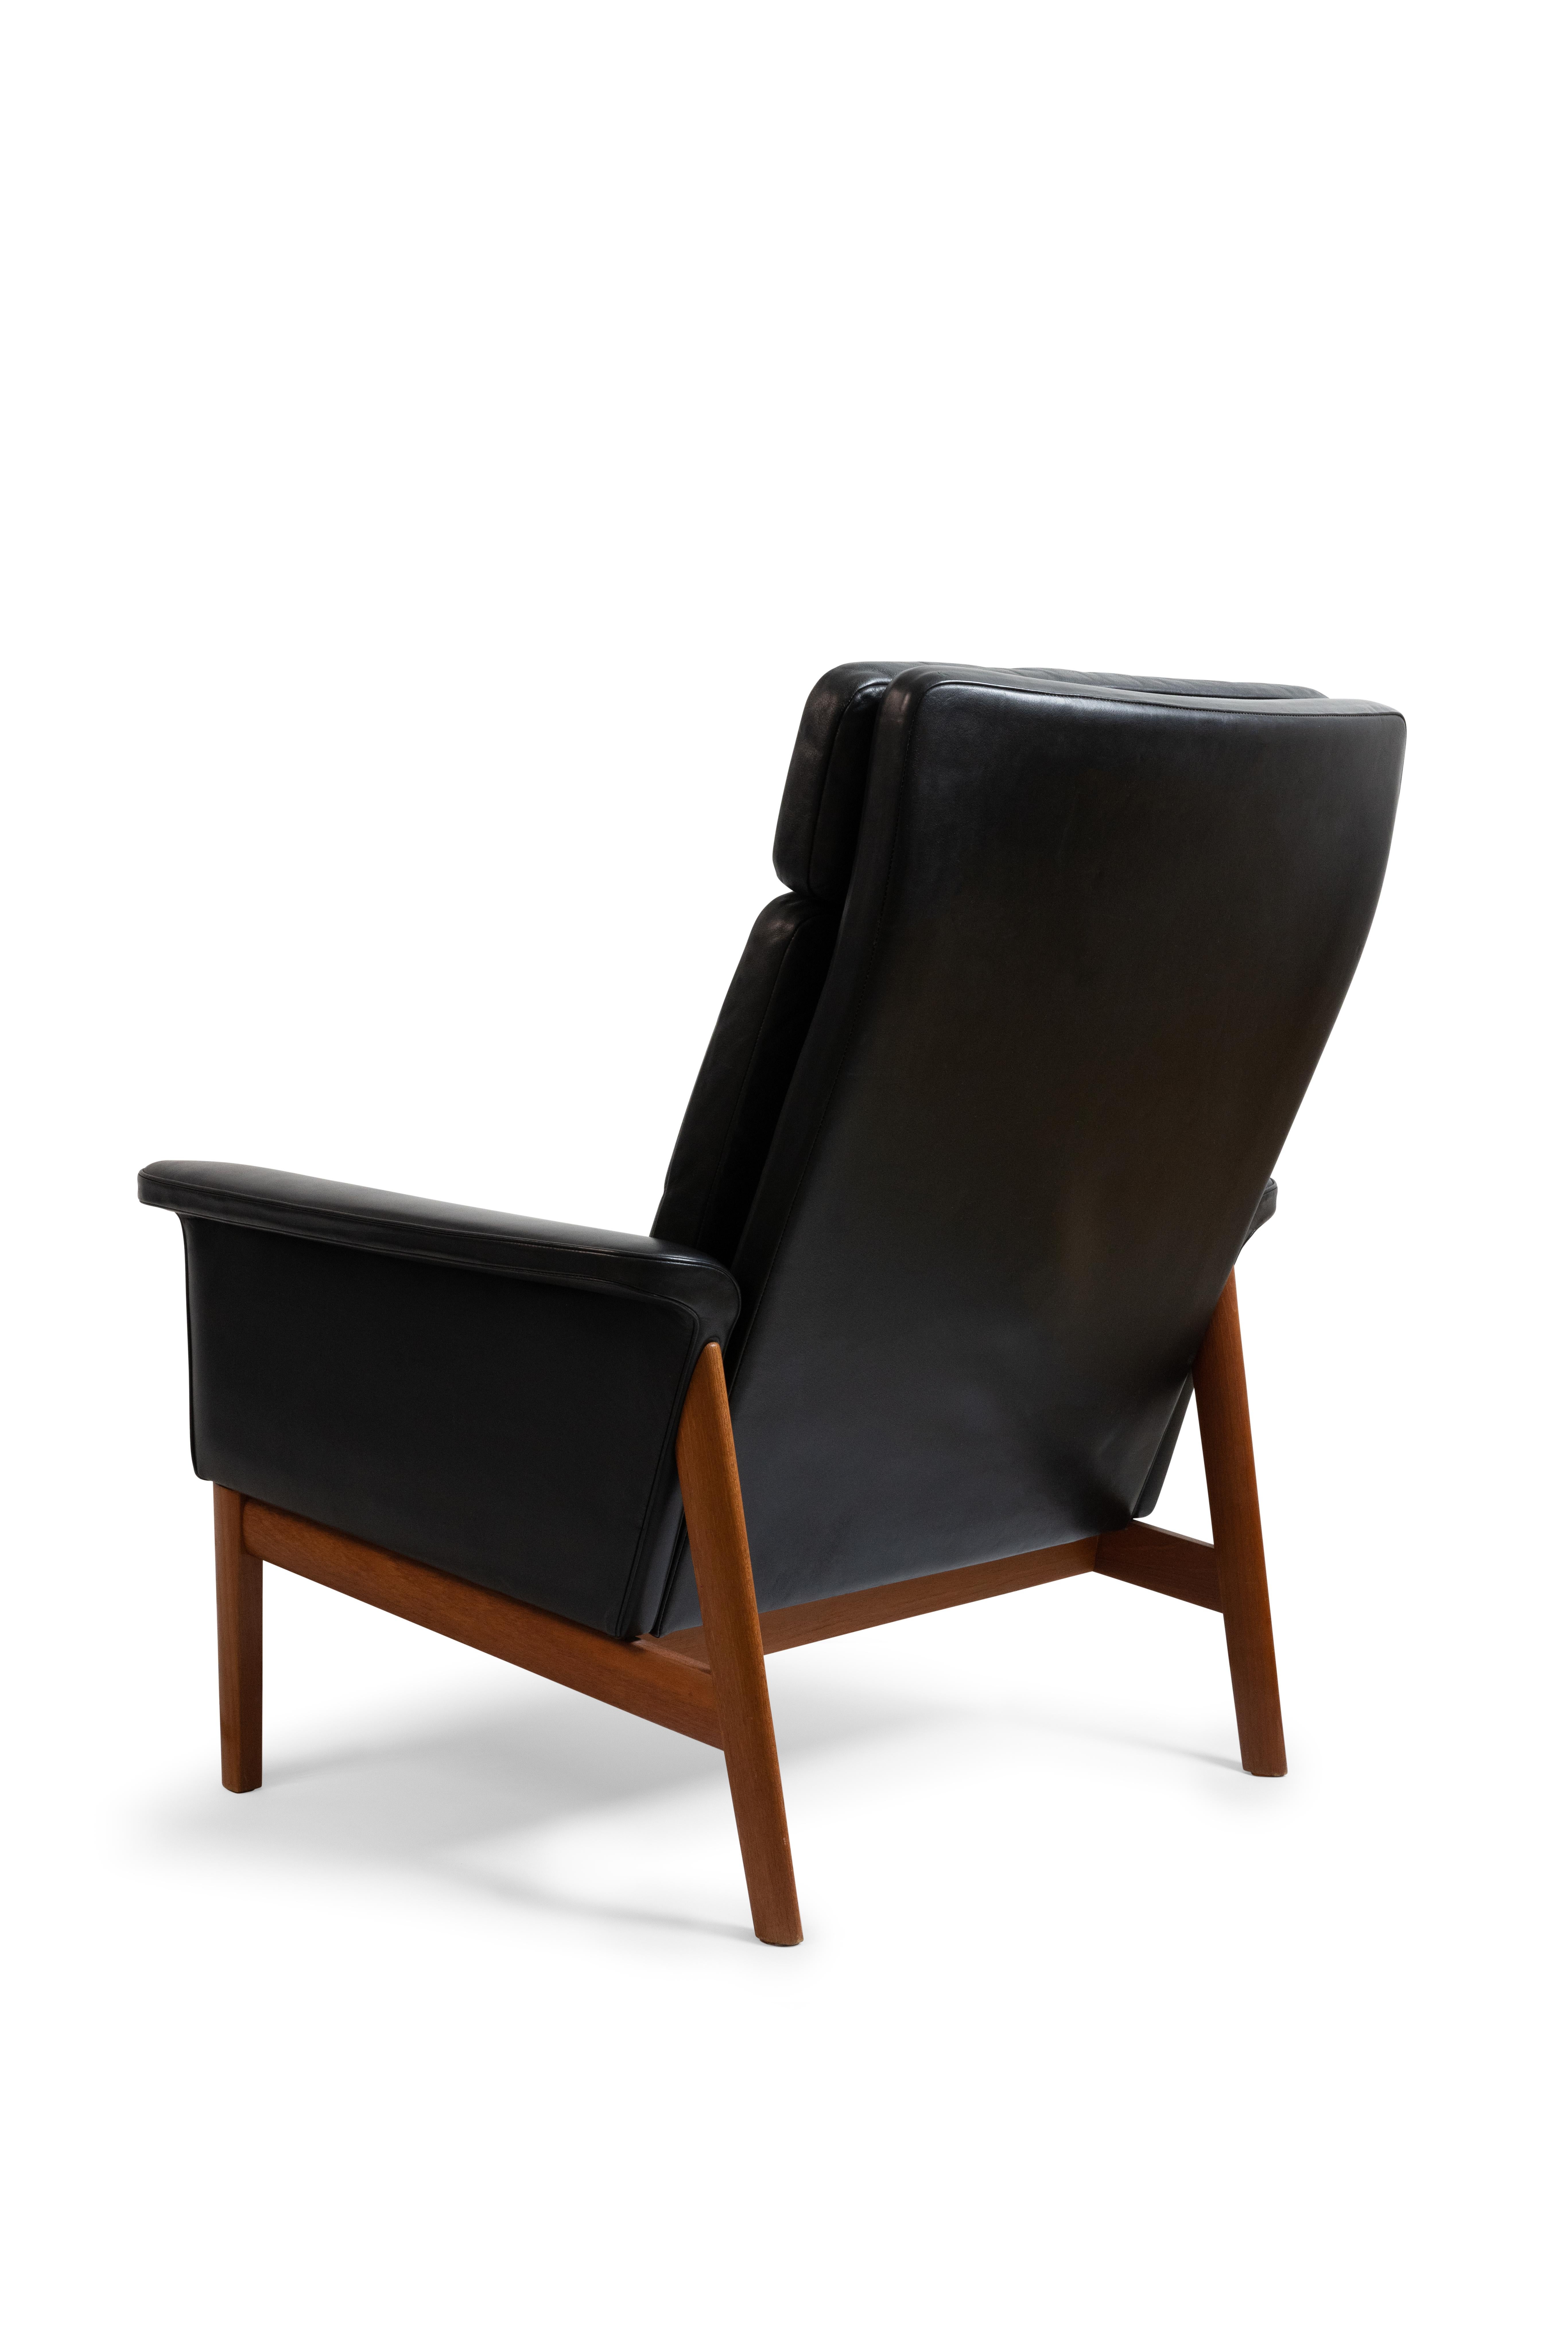 Scandinavian Modern Finn Juhl Three Seat Sofa with Original Black Leather, Model 218/3, Denmark For Sale